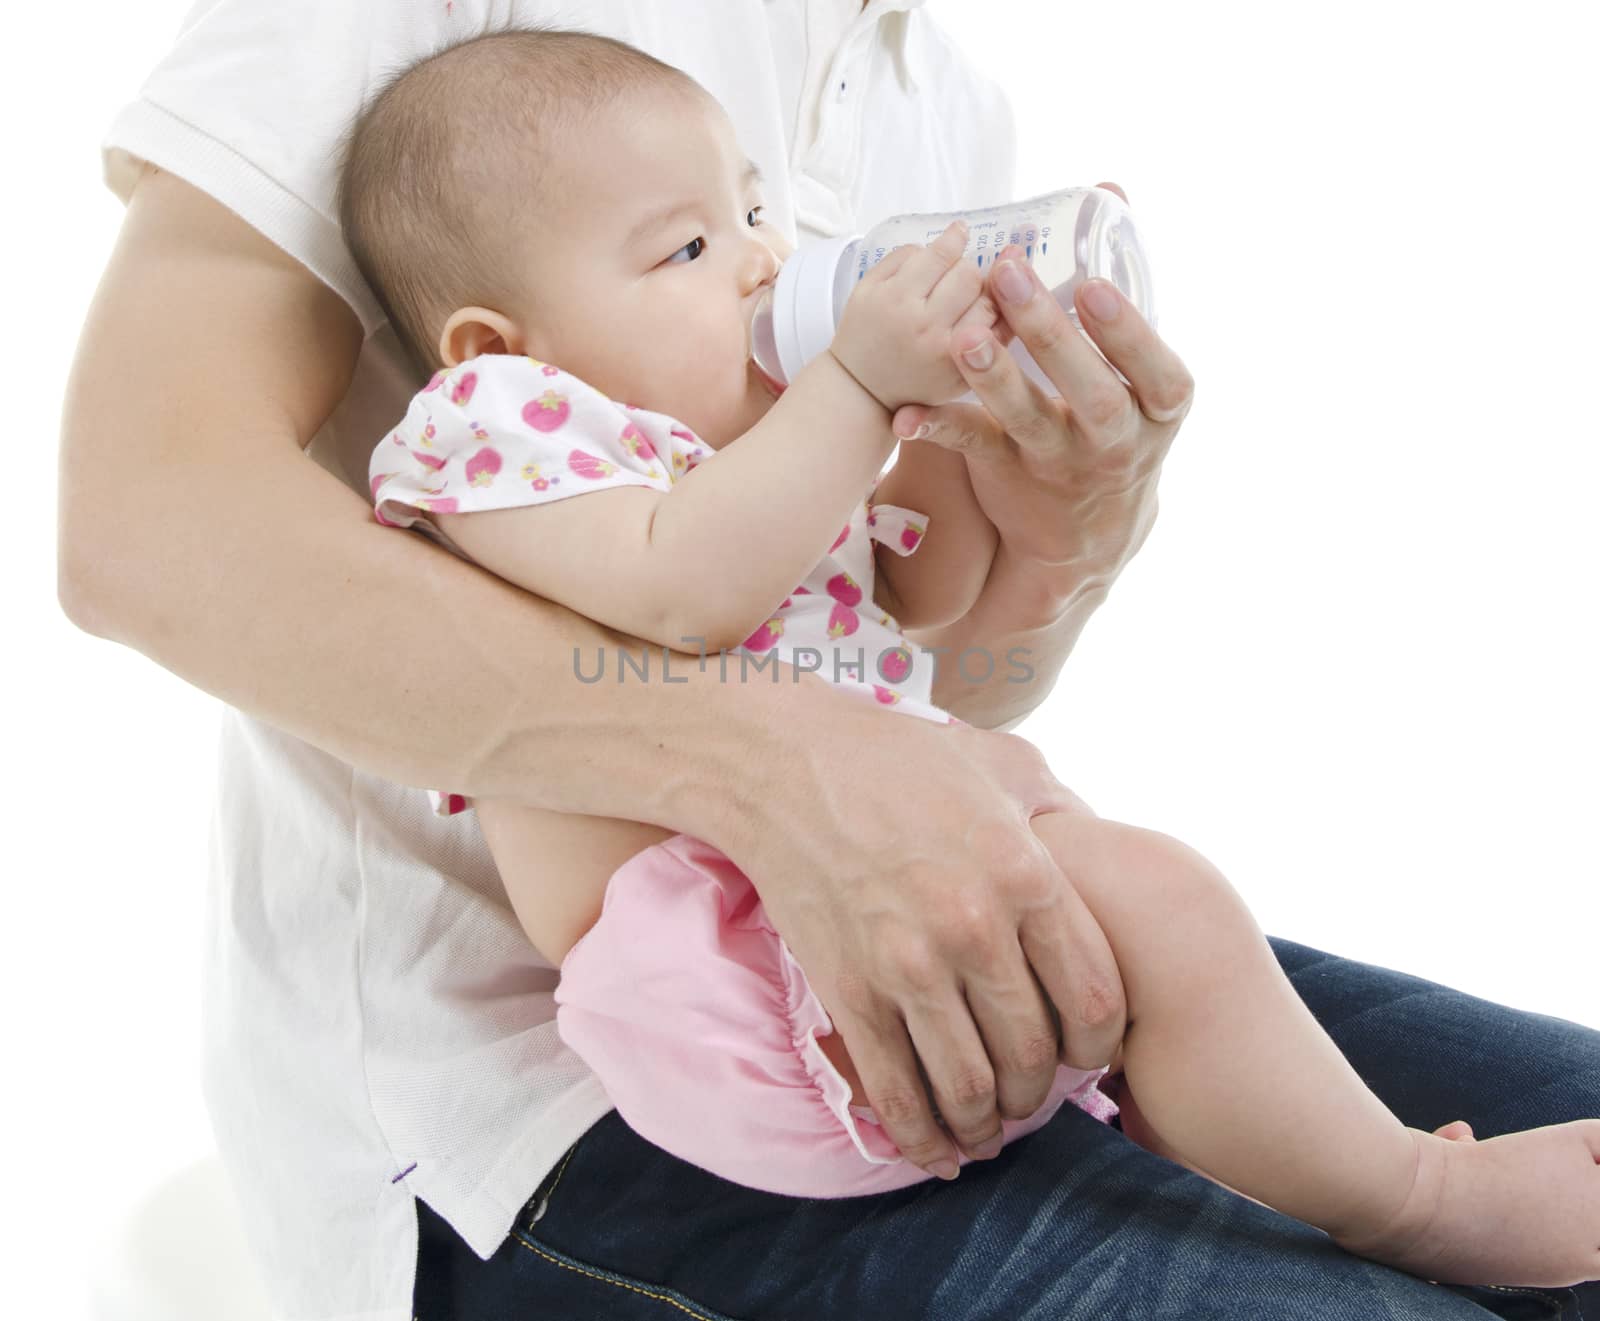 Asian new father feeding baby girl drinking milk bottle, isolated on white background.